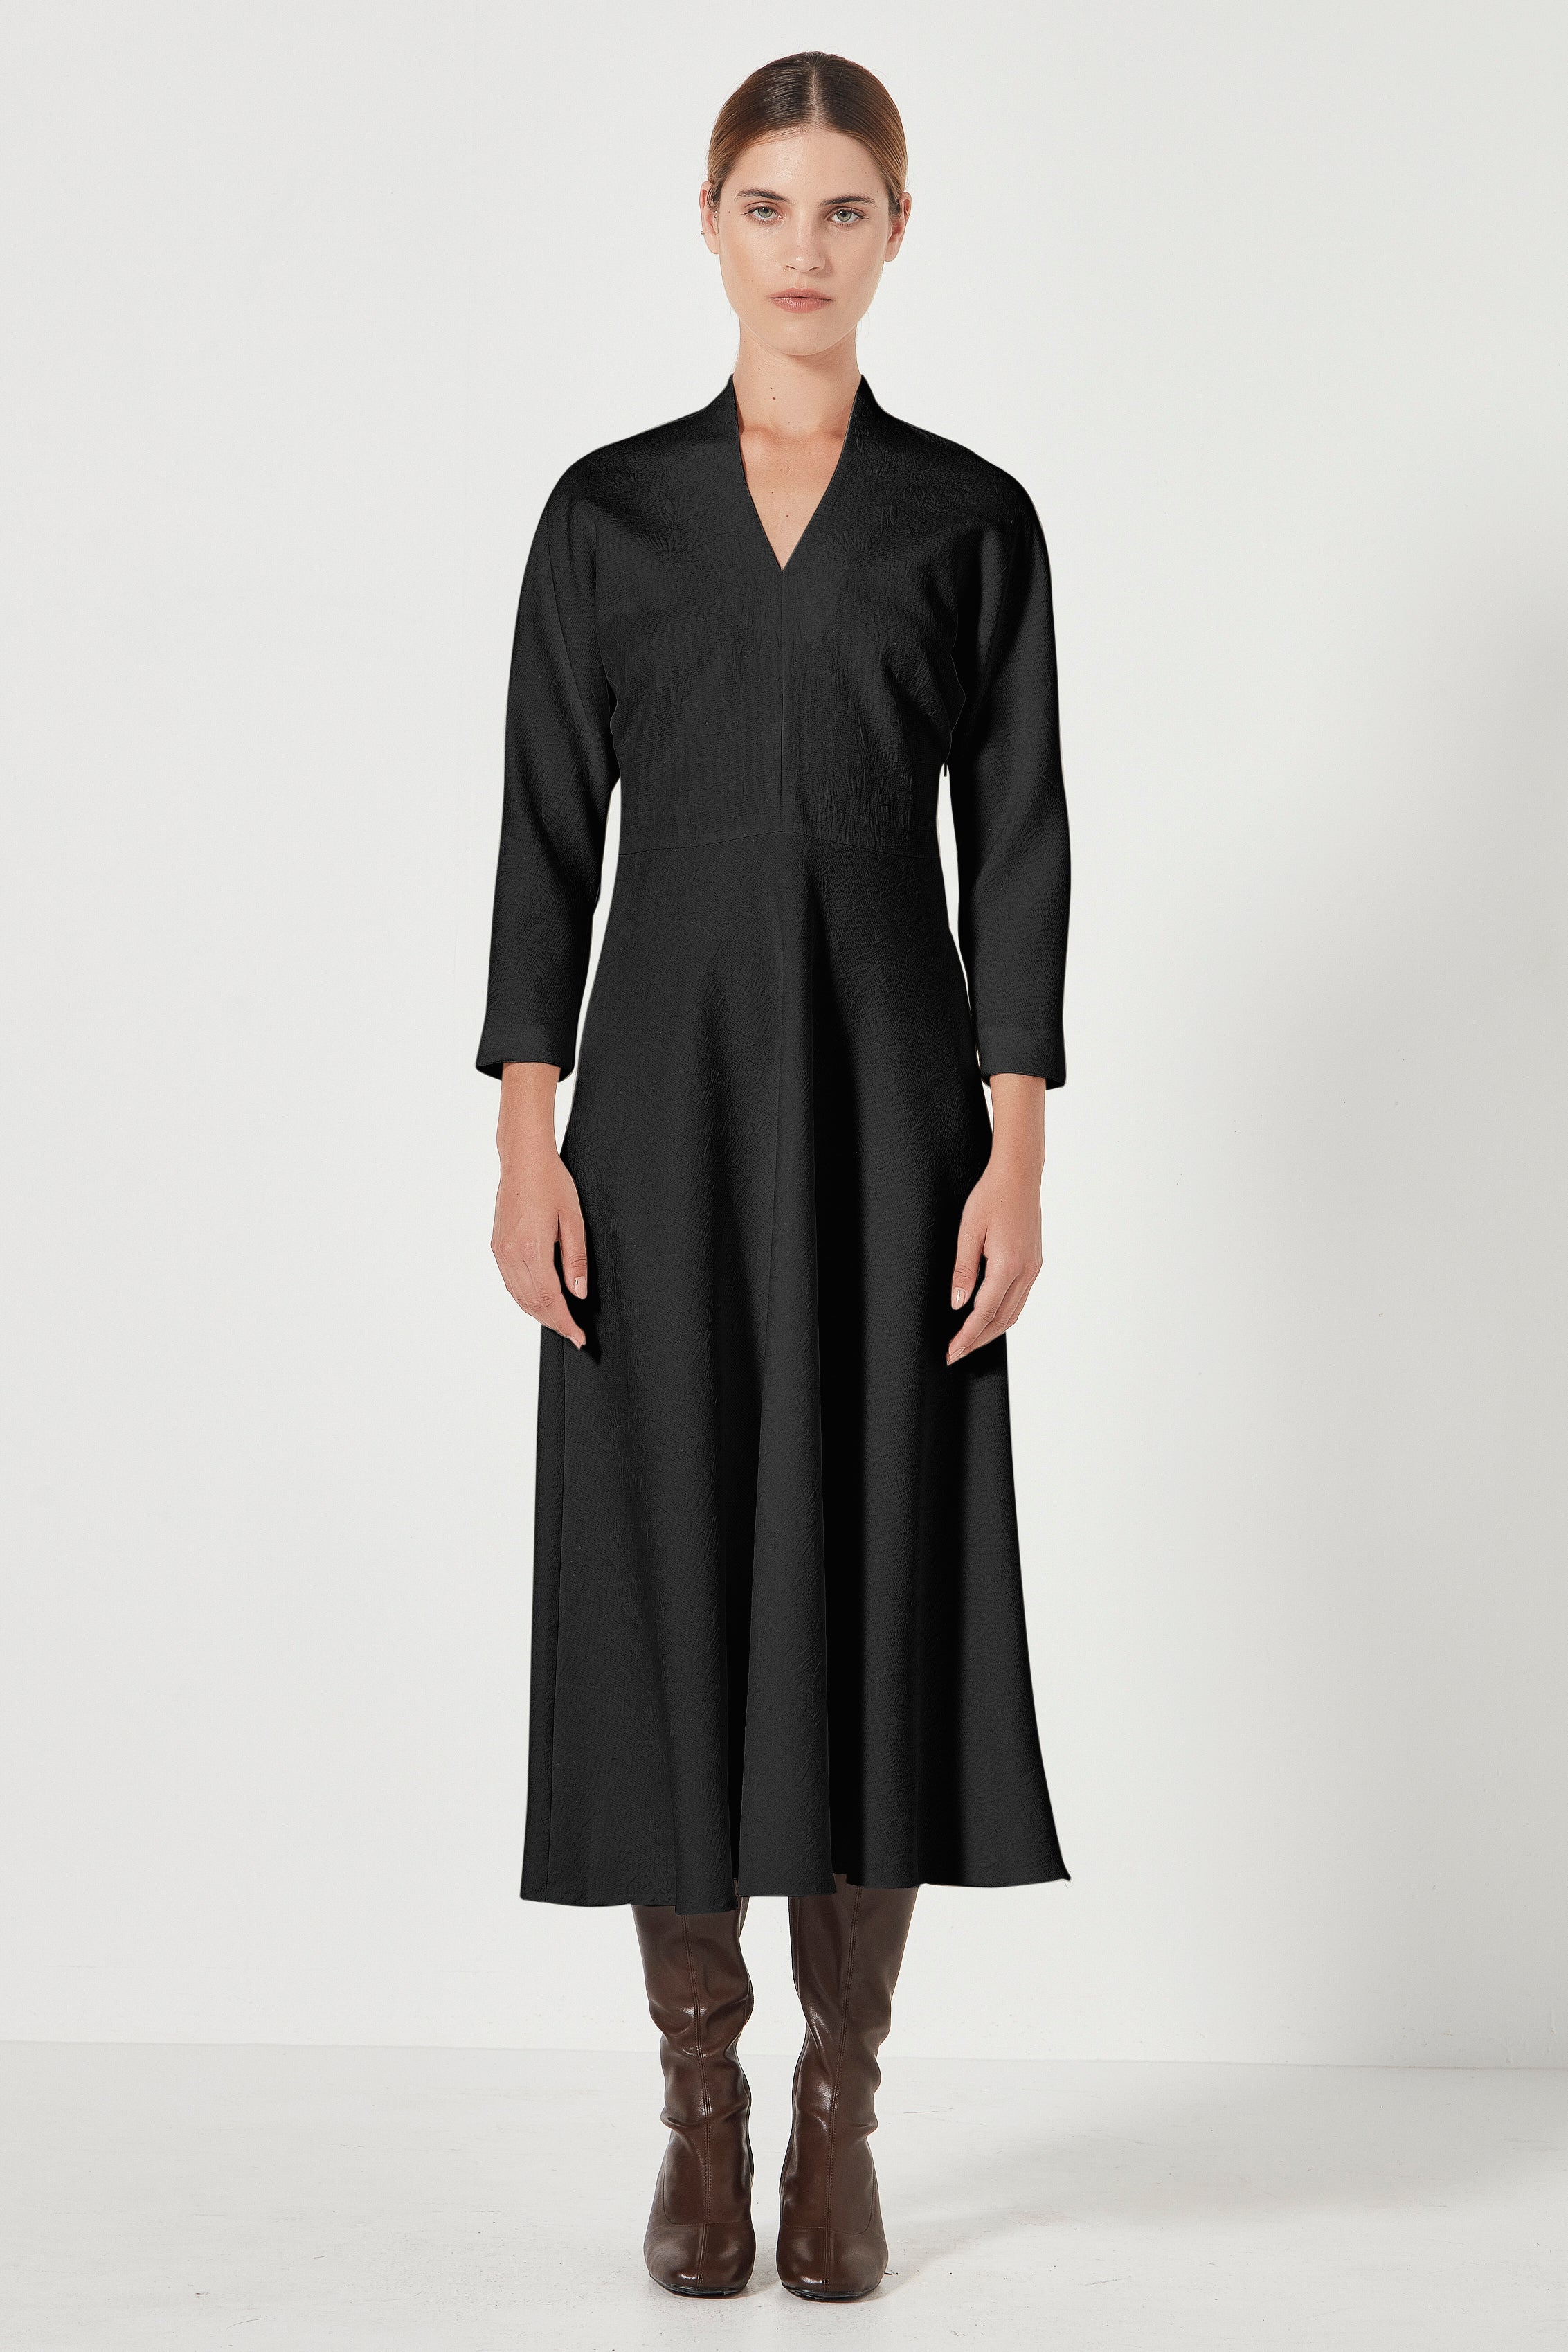 The Amelia Dress in Black Jacquard